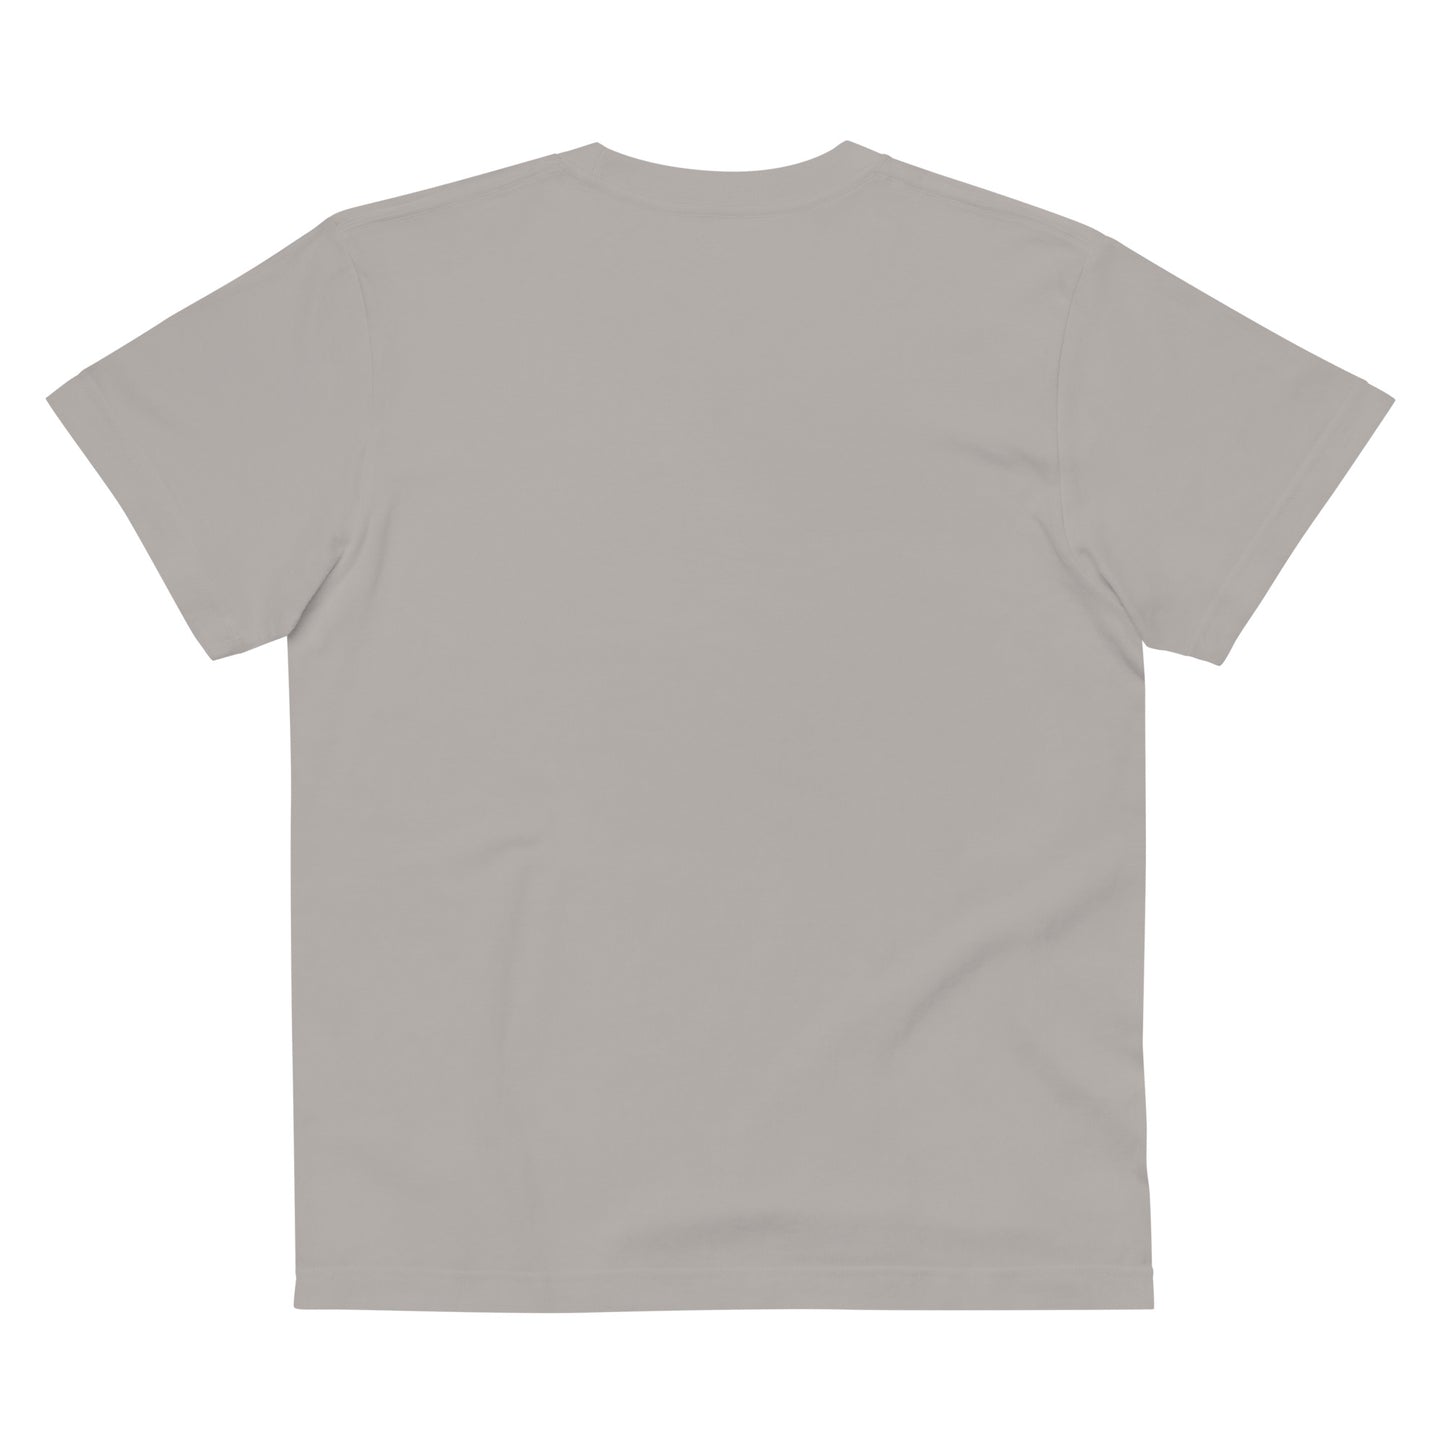 P001 - High quality cotton T-shirt (Universal balance : Gray)